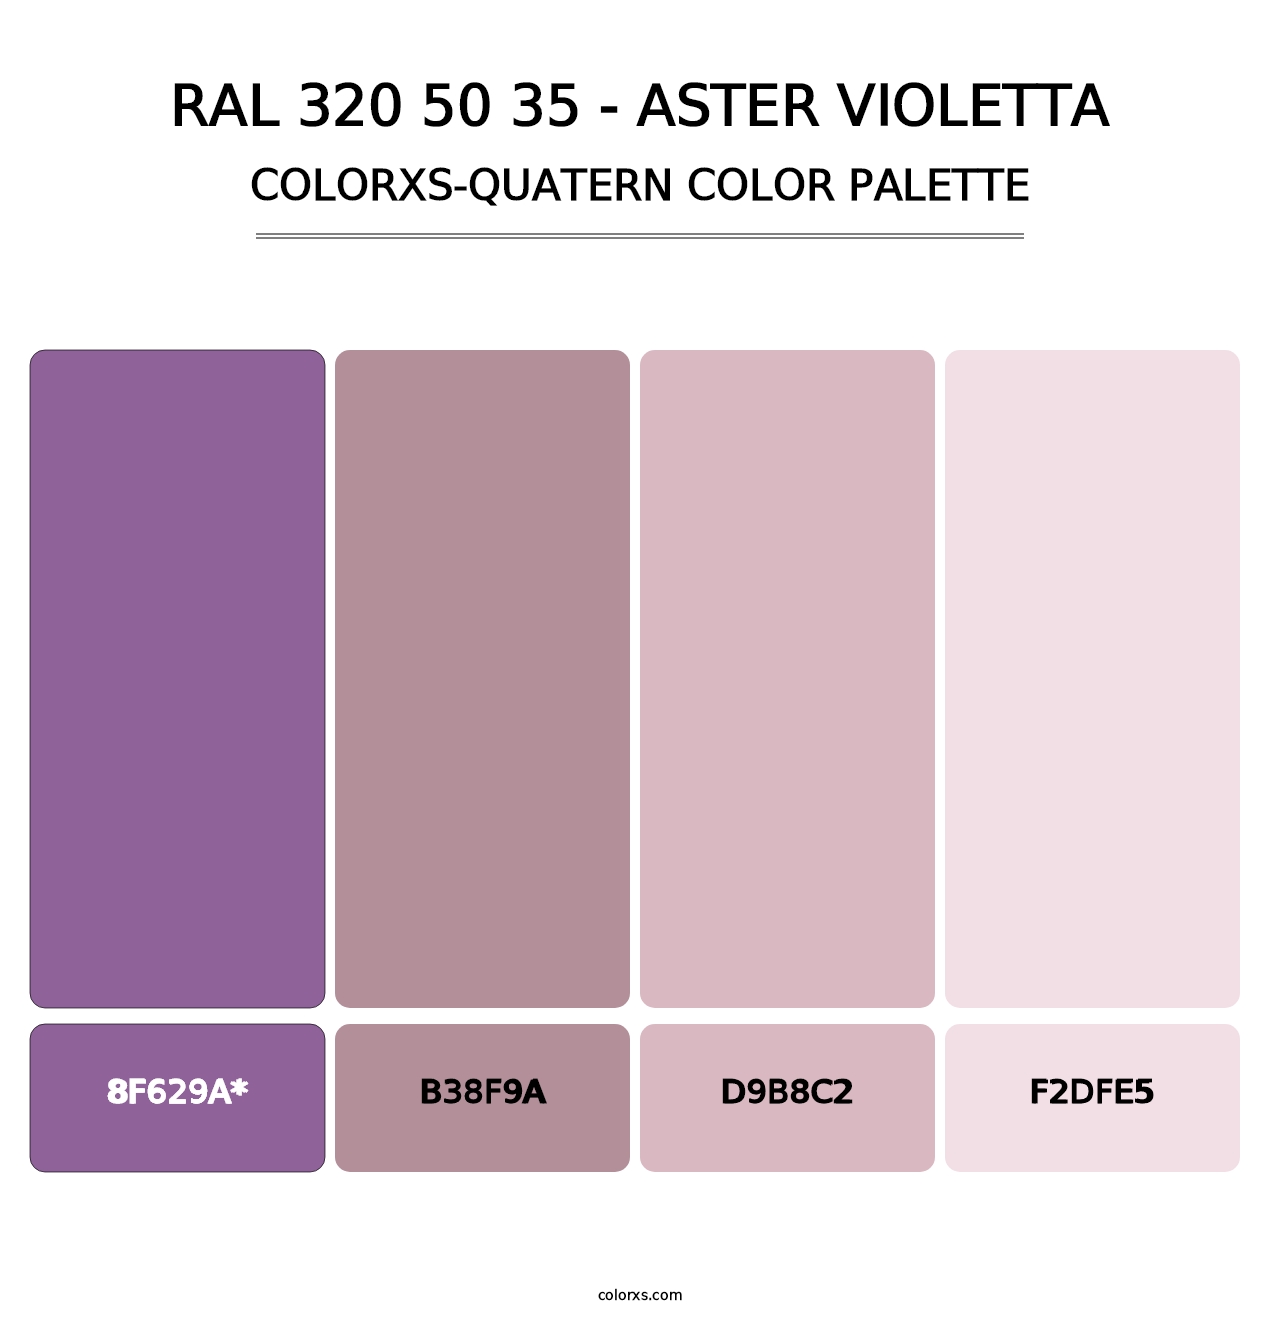 RAL 320 50 35 - Aster Violetta - Colorxs Quatern Palette